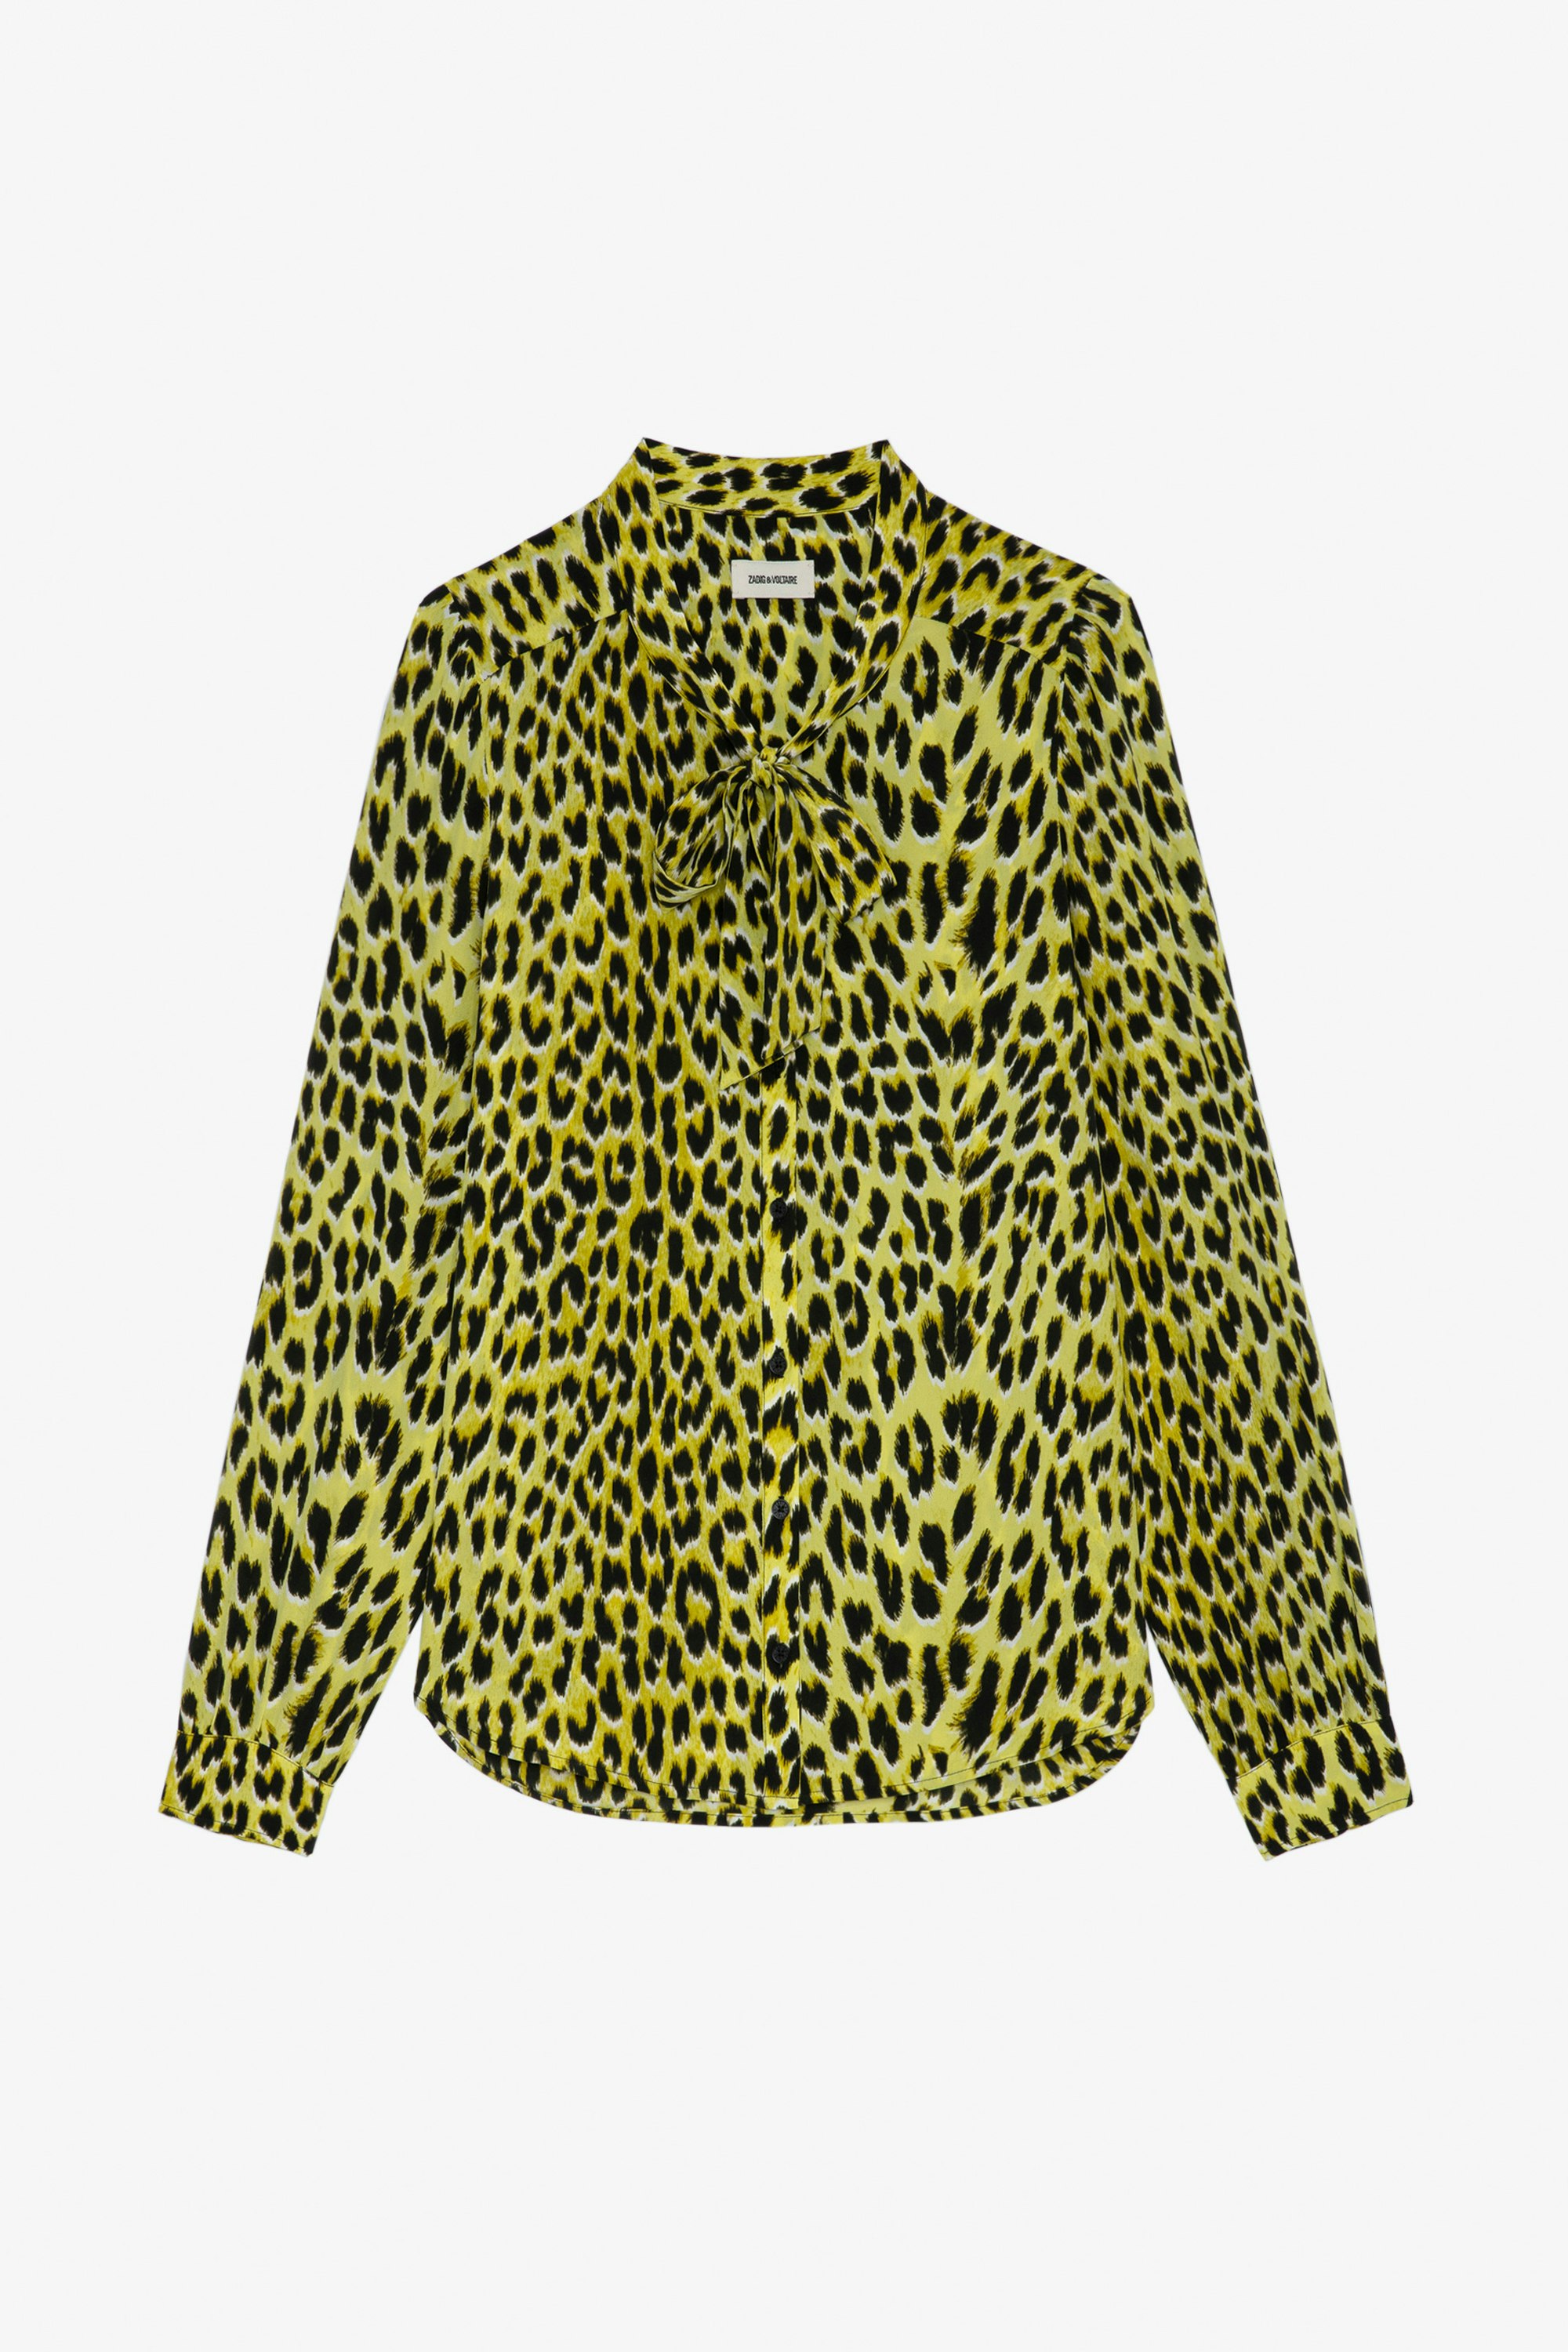 Taos Leopard Silk Blouse - Women’s yellow leopard-print silk pussy-bow blouse.